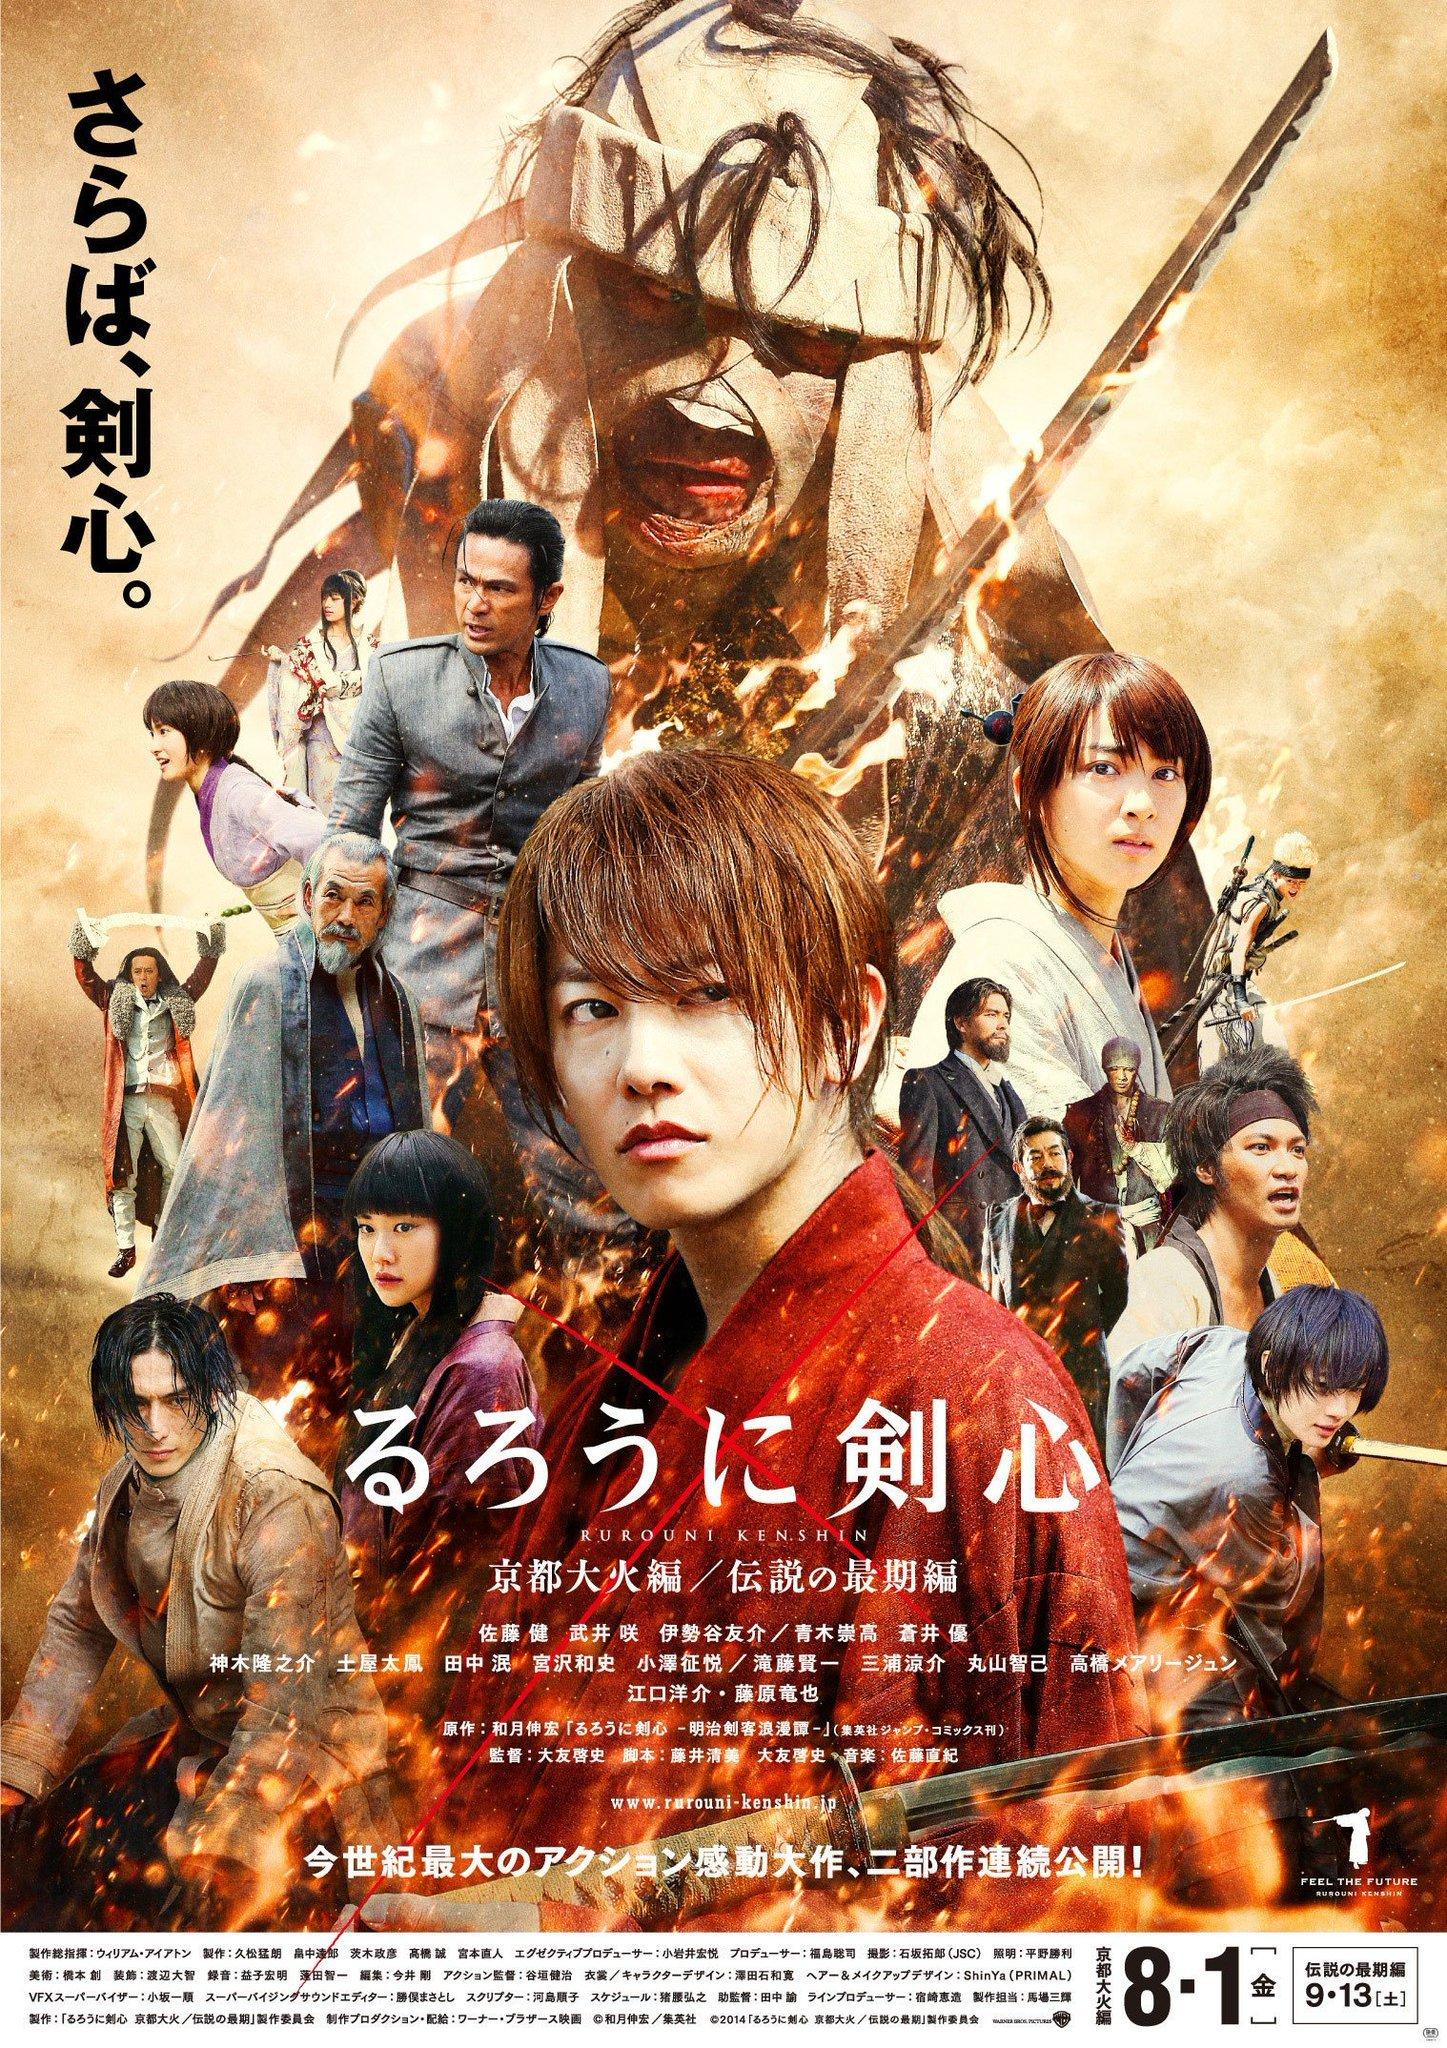 Poster phim Rurouni Kenshin. (Nguồn: Internet)